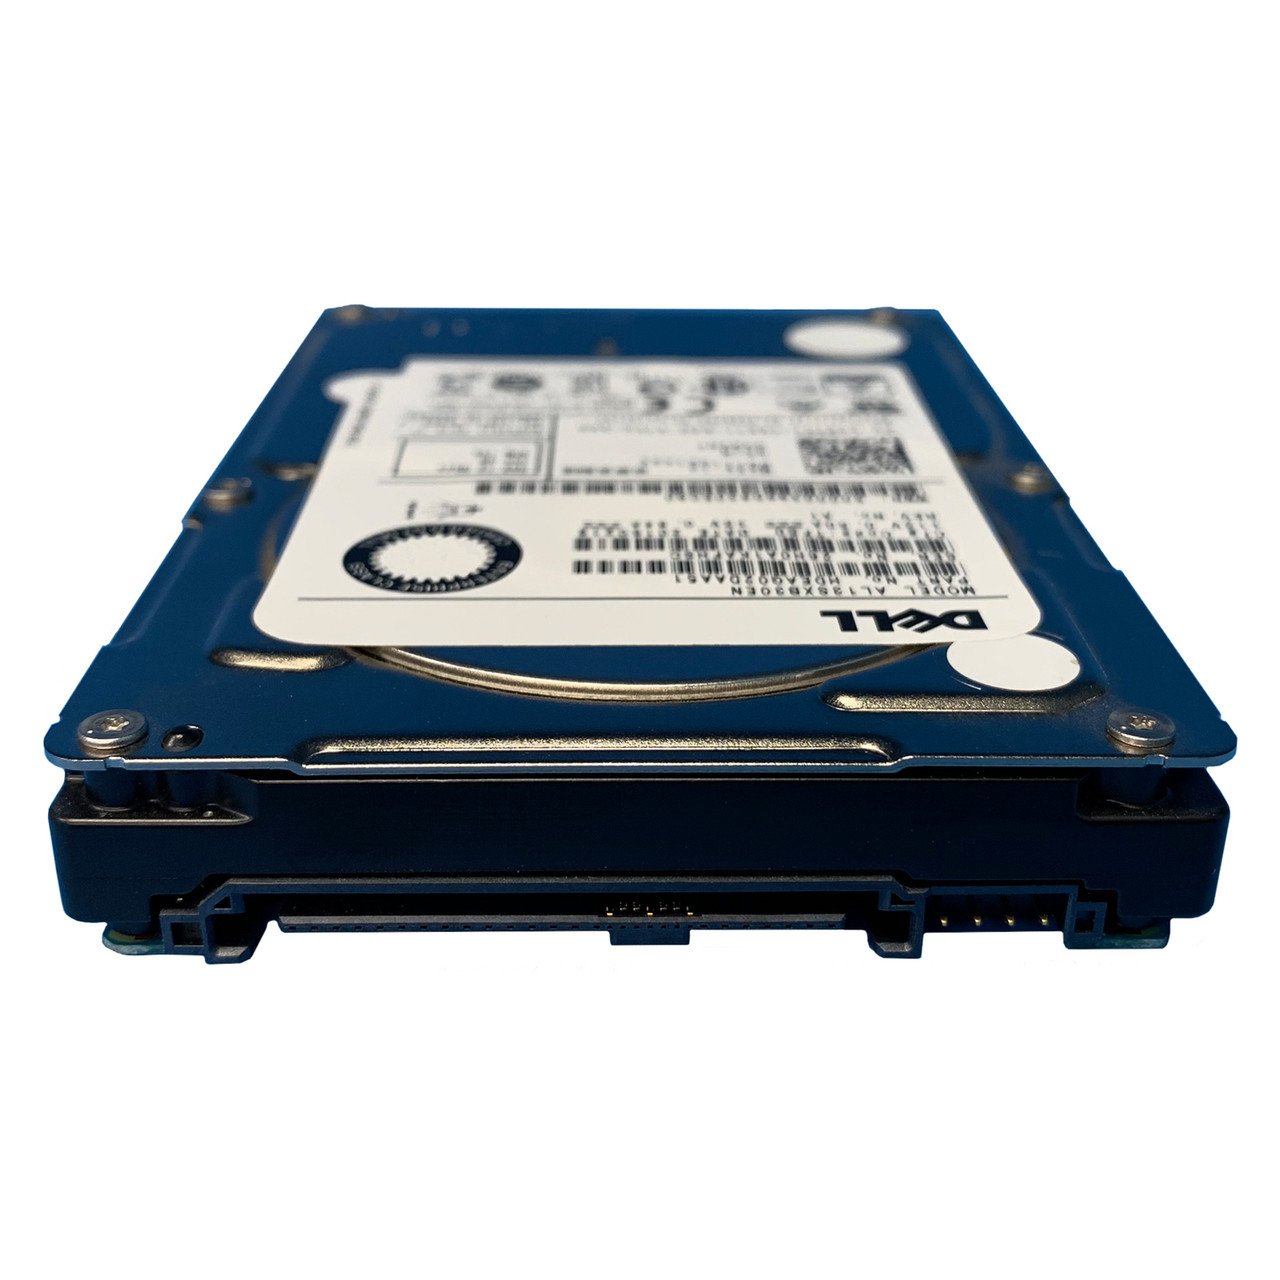 New Dell PowerEdge R610 500GB 7.2K 2.5" SATA Hard Drive 1 Year Warranty 